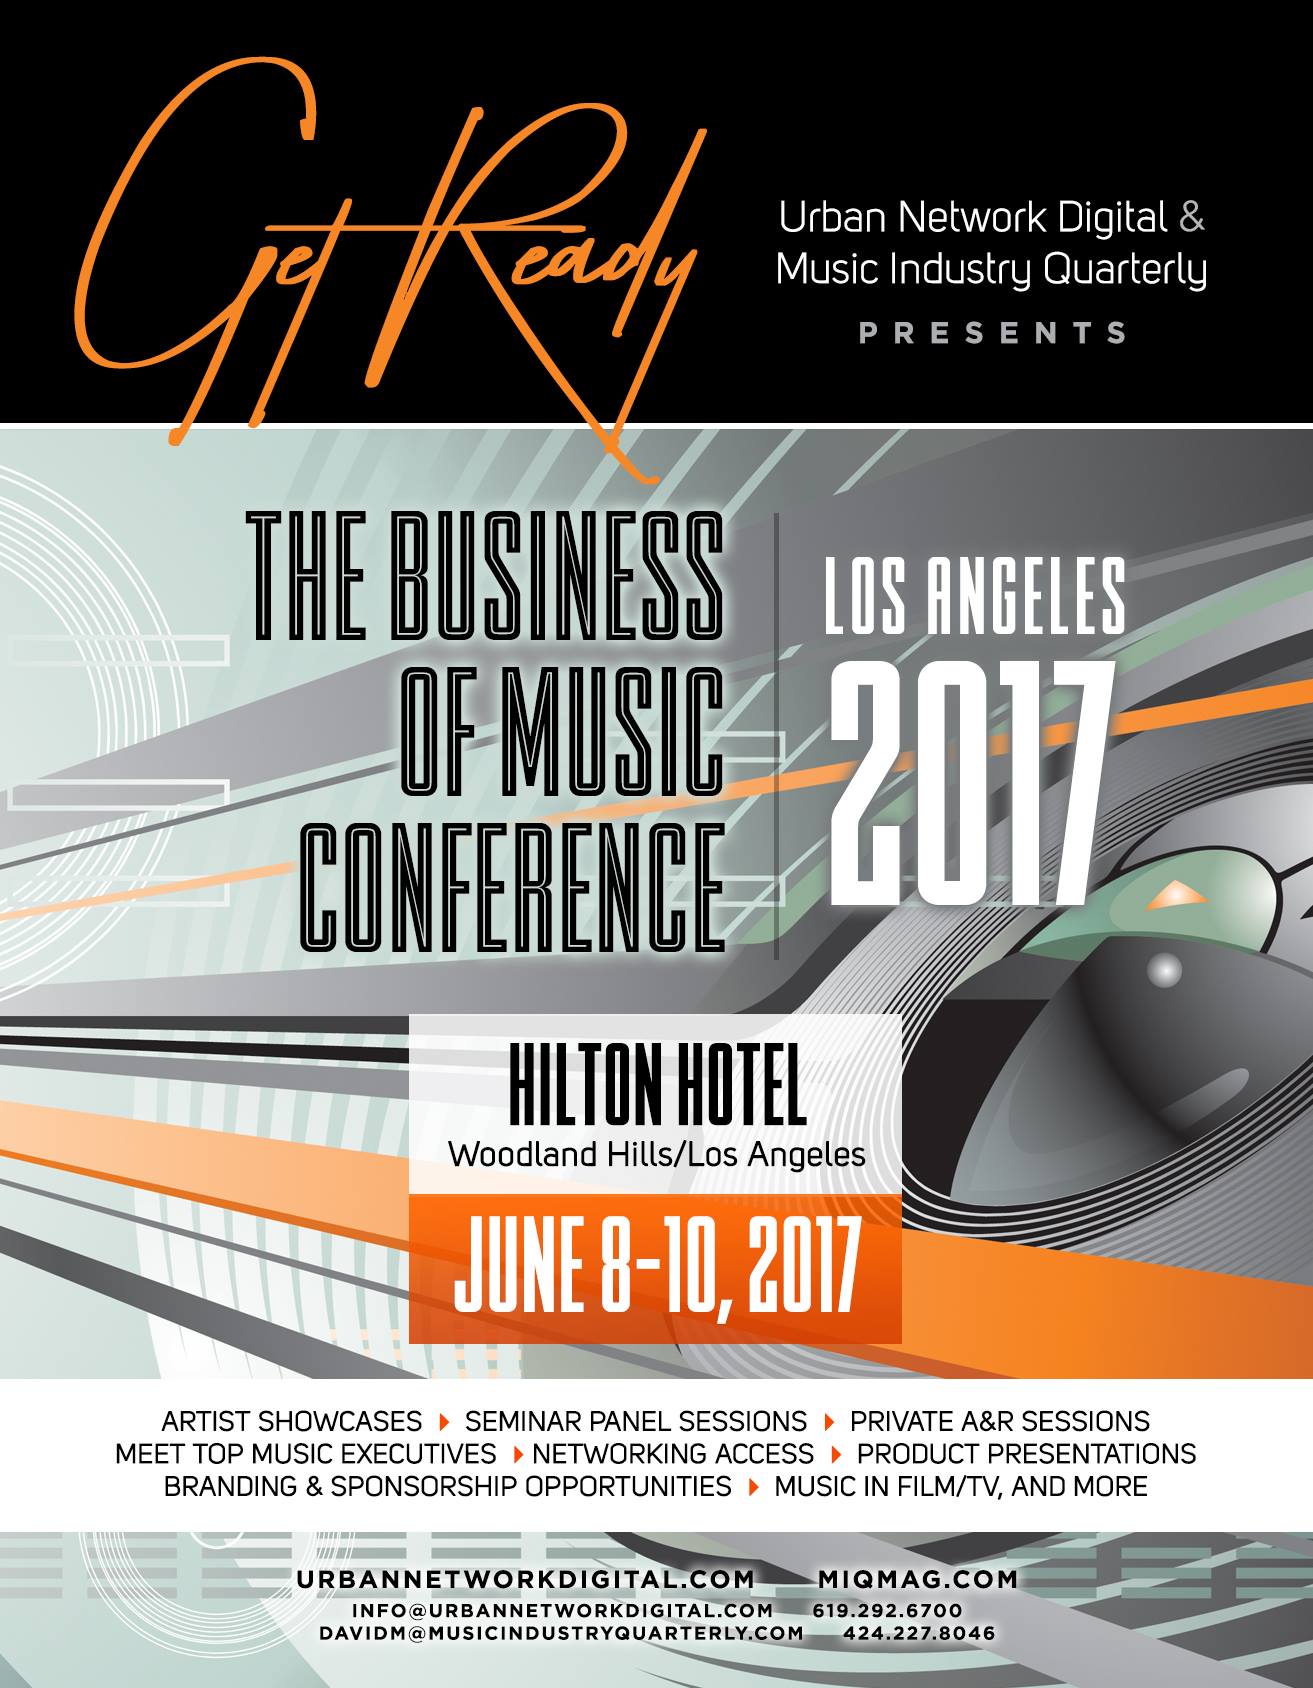 The Urban Network Digital & M.I.Q. Conference Hits L.A., June 8-10 | MIQ